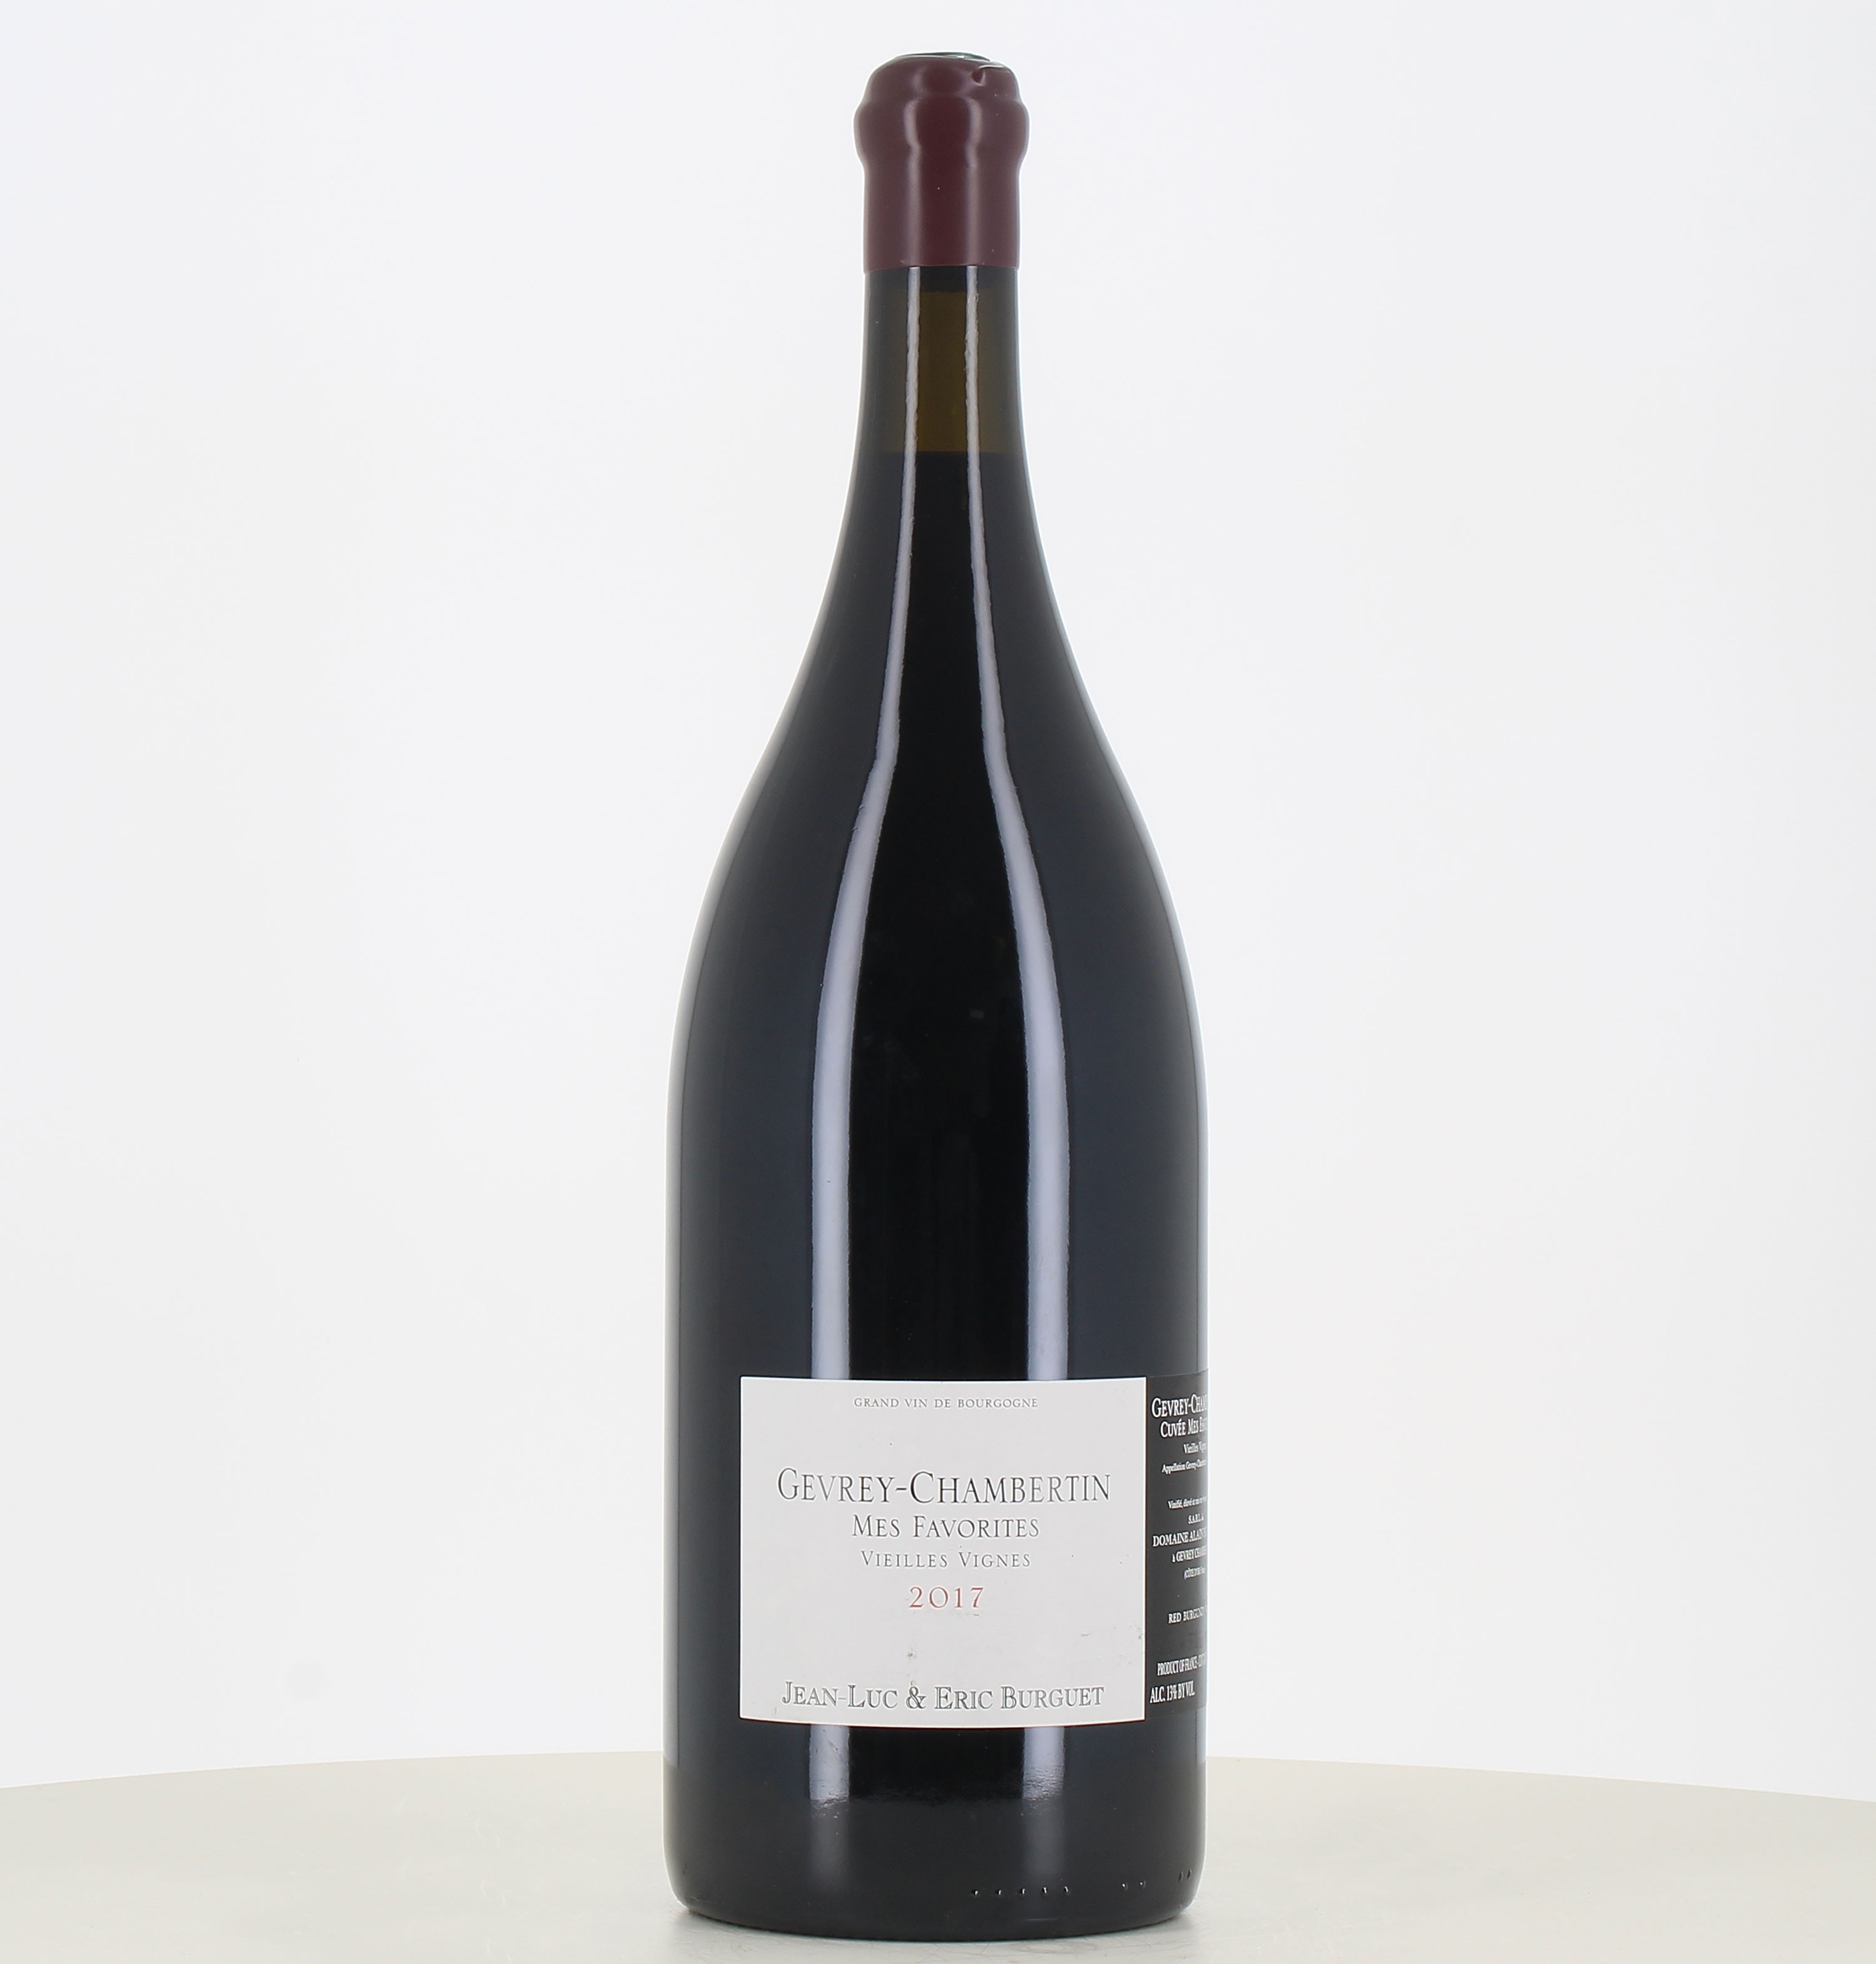 Jéroboam di vino rosso Gevrey Chambertin cuvée Mes Favorites vecchie viti 2017 dell'azienda Burguet. 